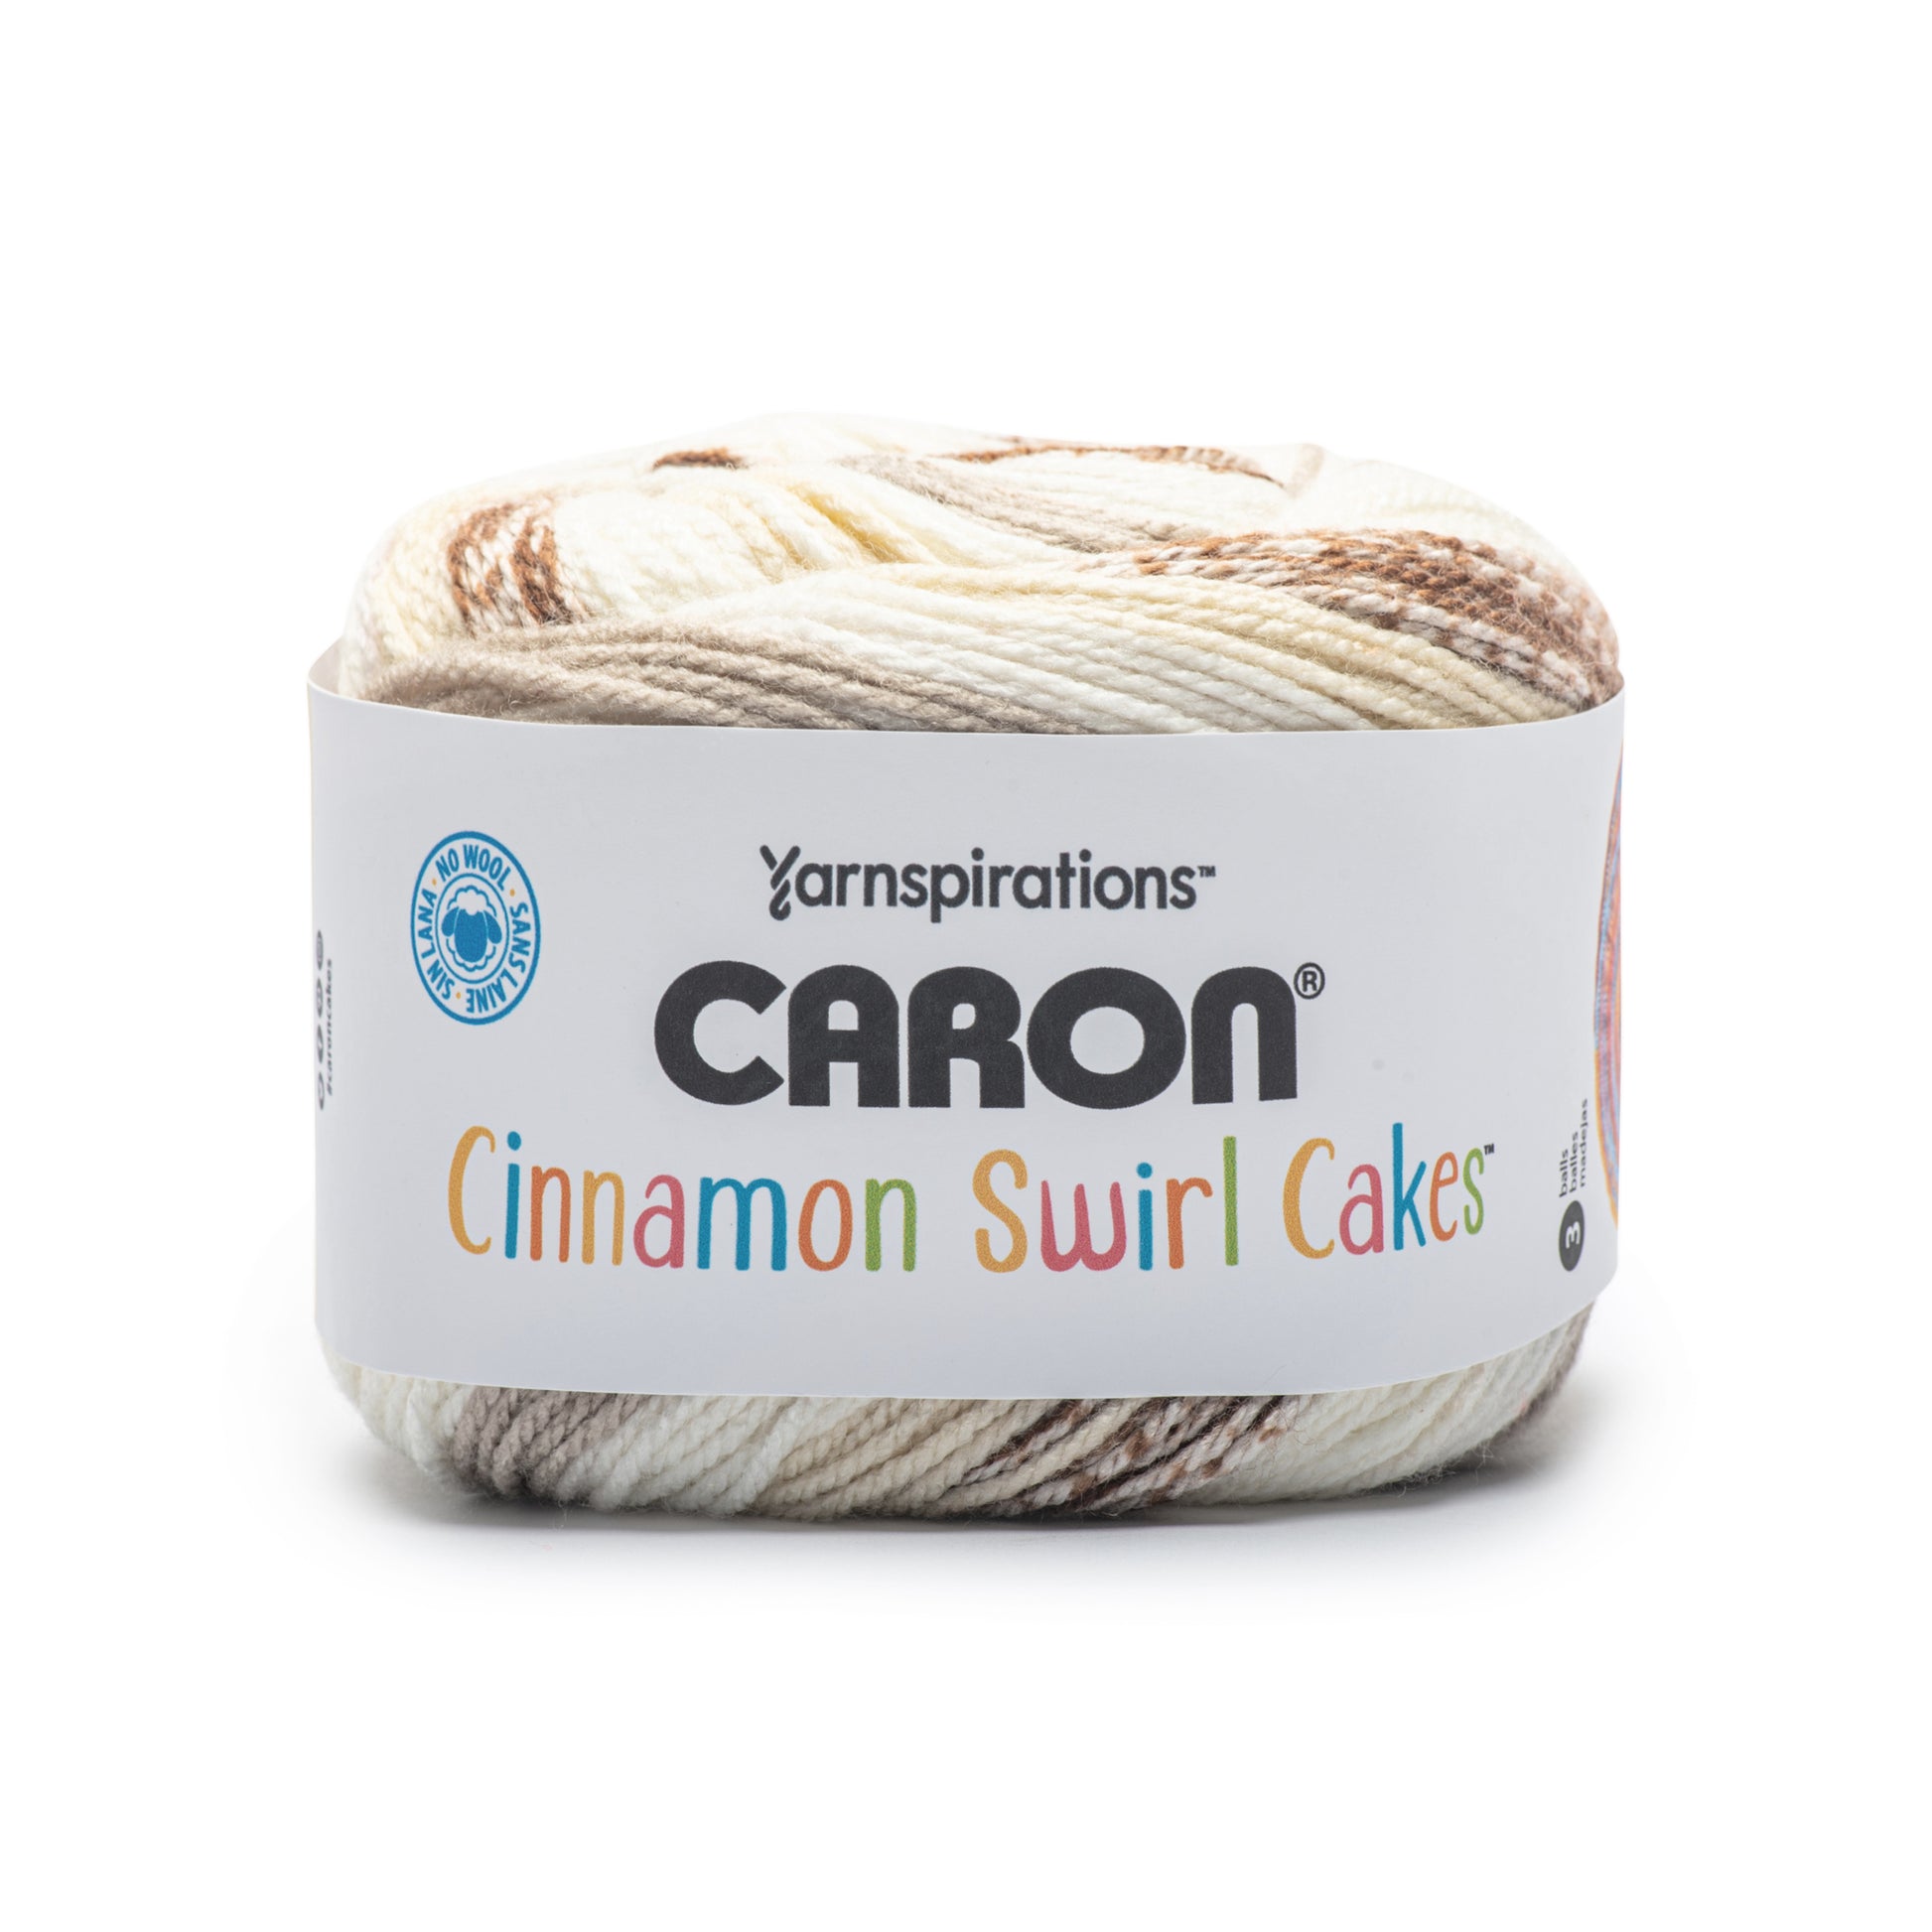 Caron Cinnamon Swirl Cakes Yarn, Retailer Exclusive